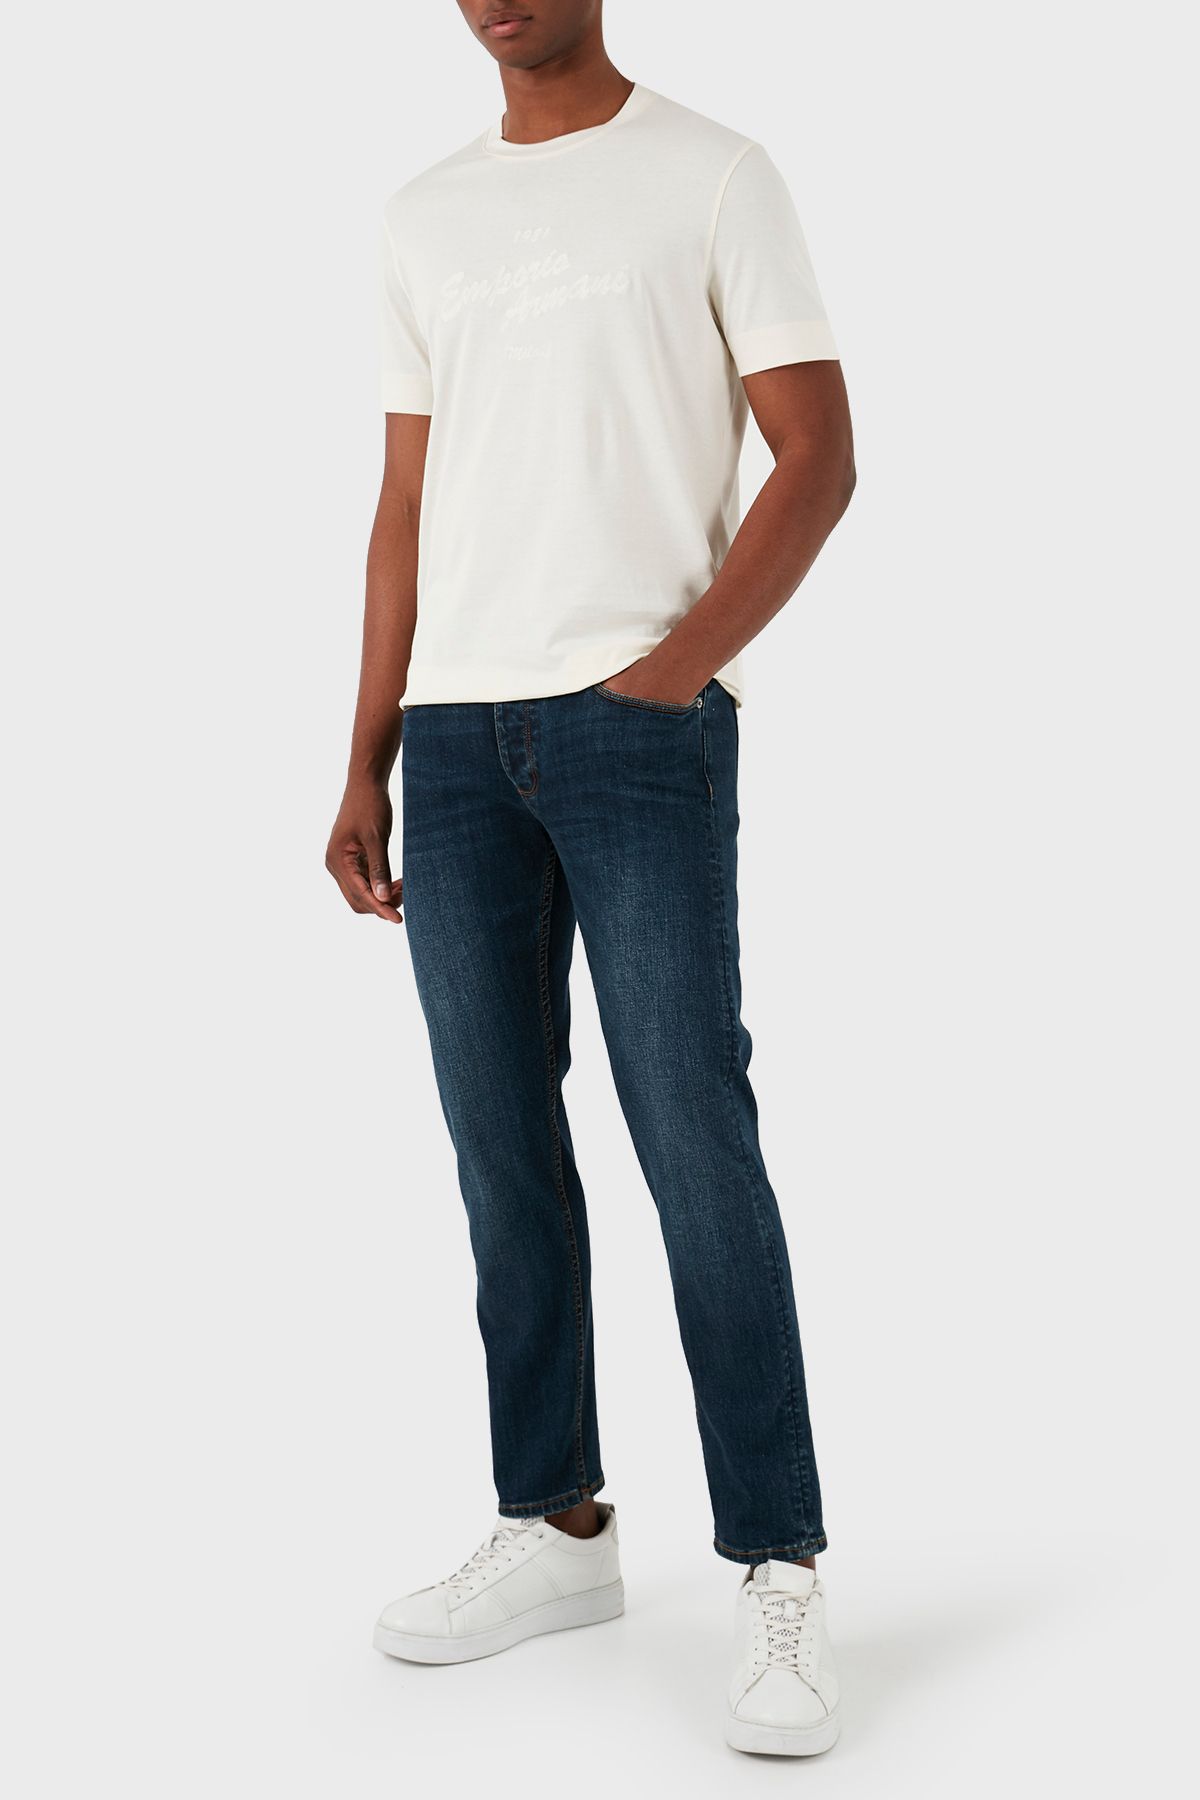 Emporio Armani J75 Düşük Bel Slim Fit Jeans Erkek KOT PANTOLON 3D1J75 1DRRZ 0942